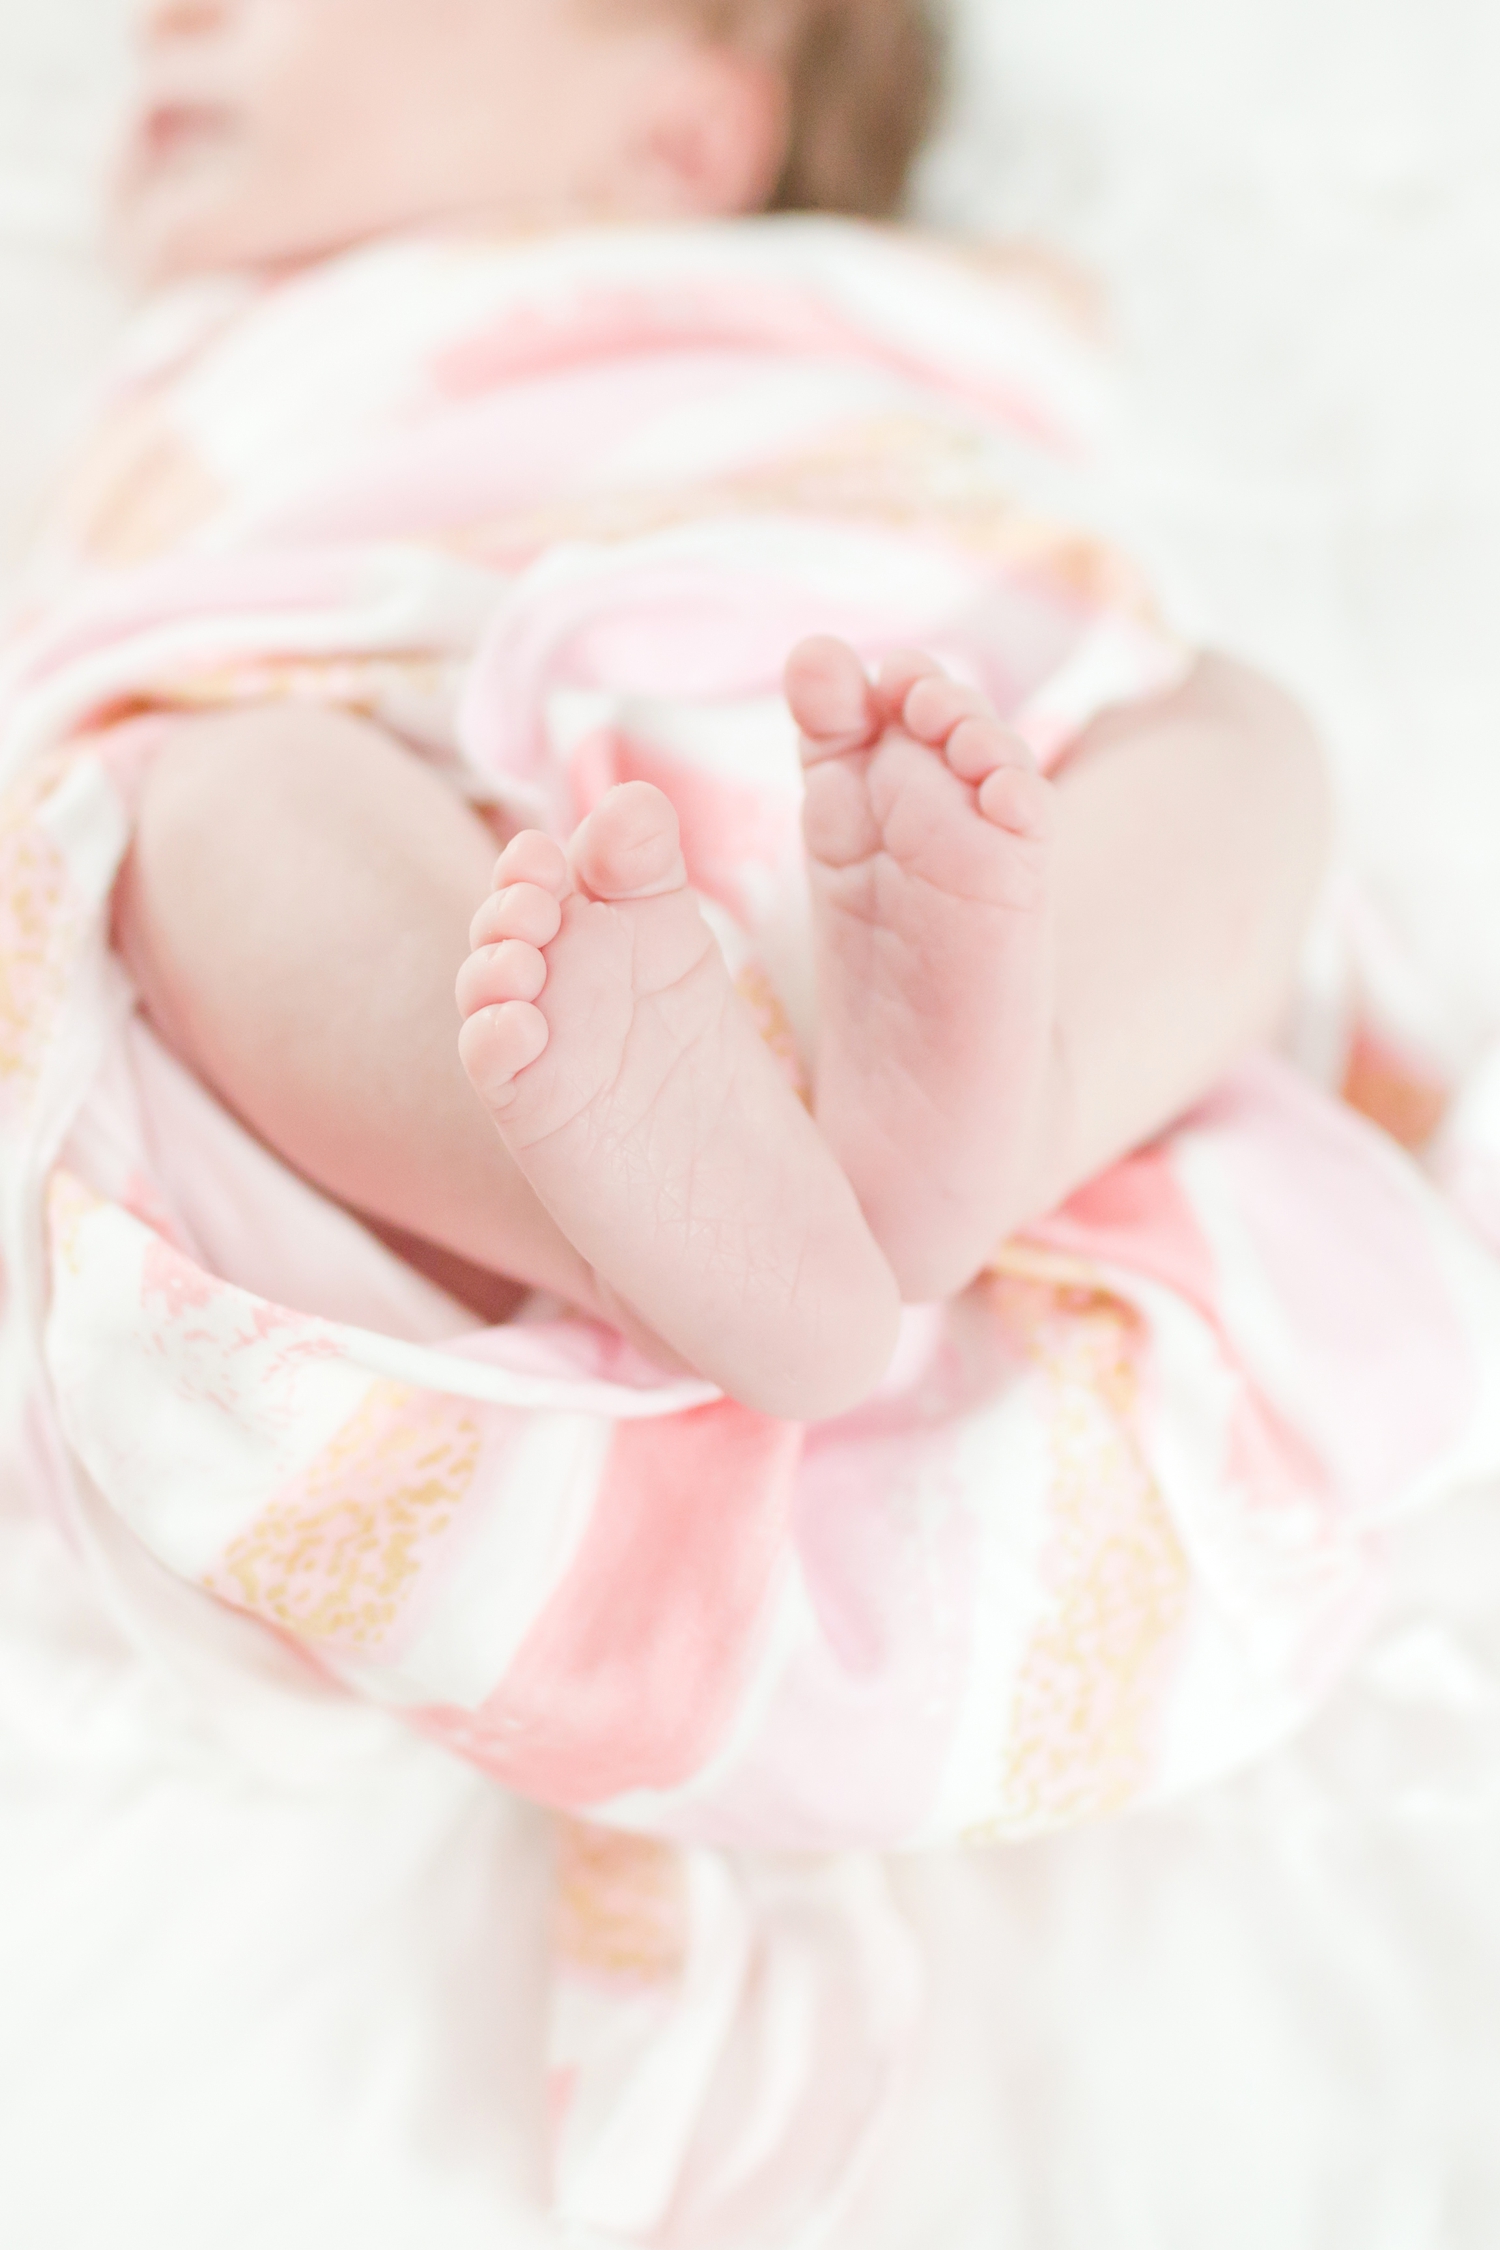 Miano Newborn-117_anna grace photography newborn photography baltimore maryland newborn and family photographer photo.jpg